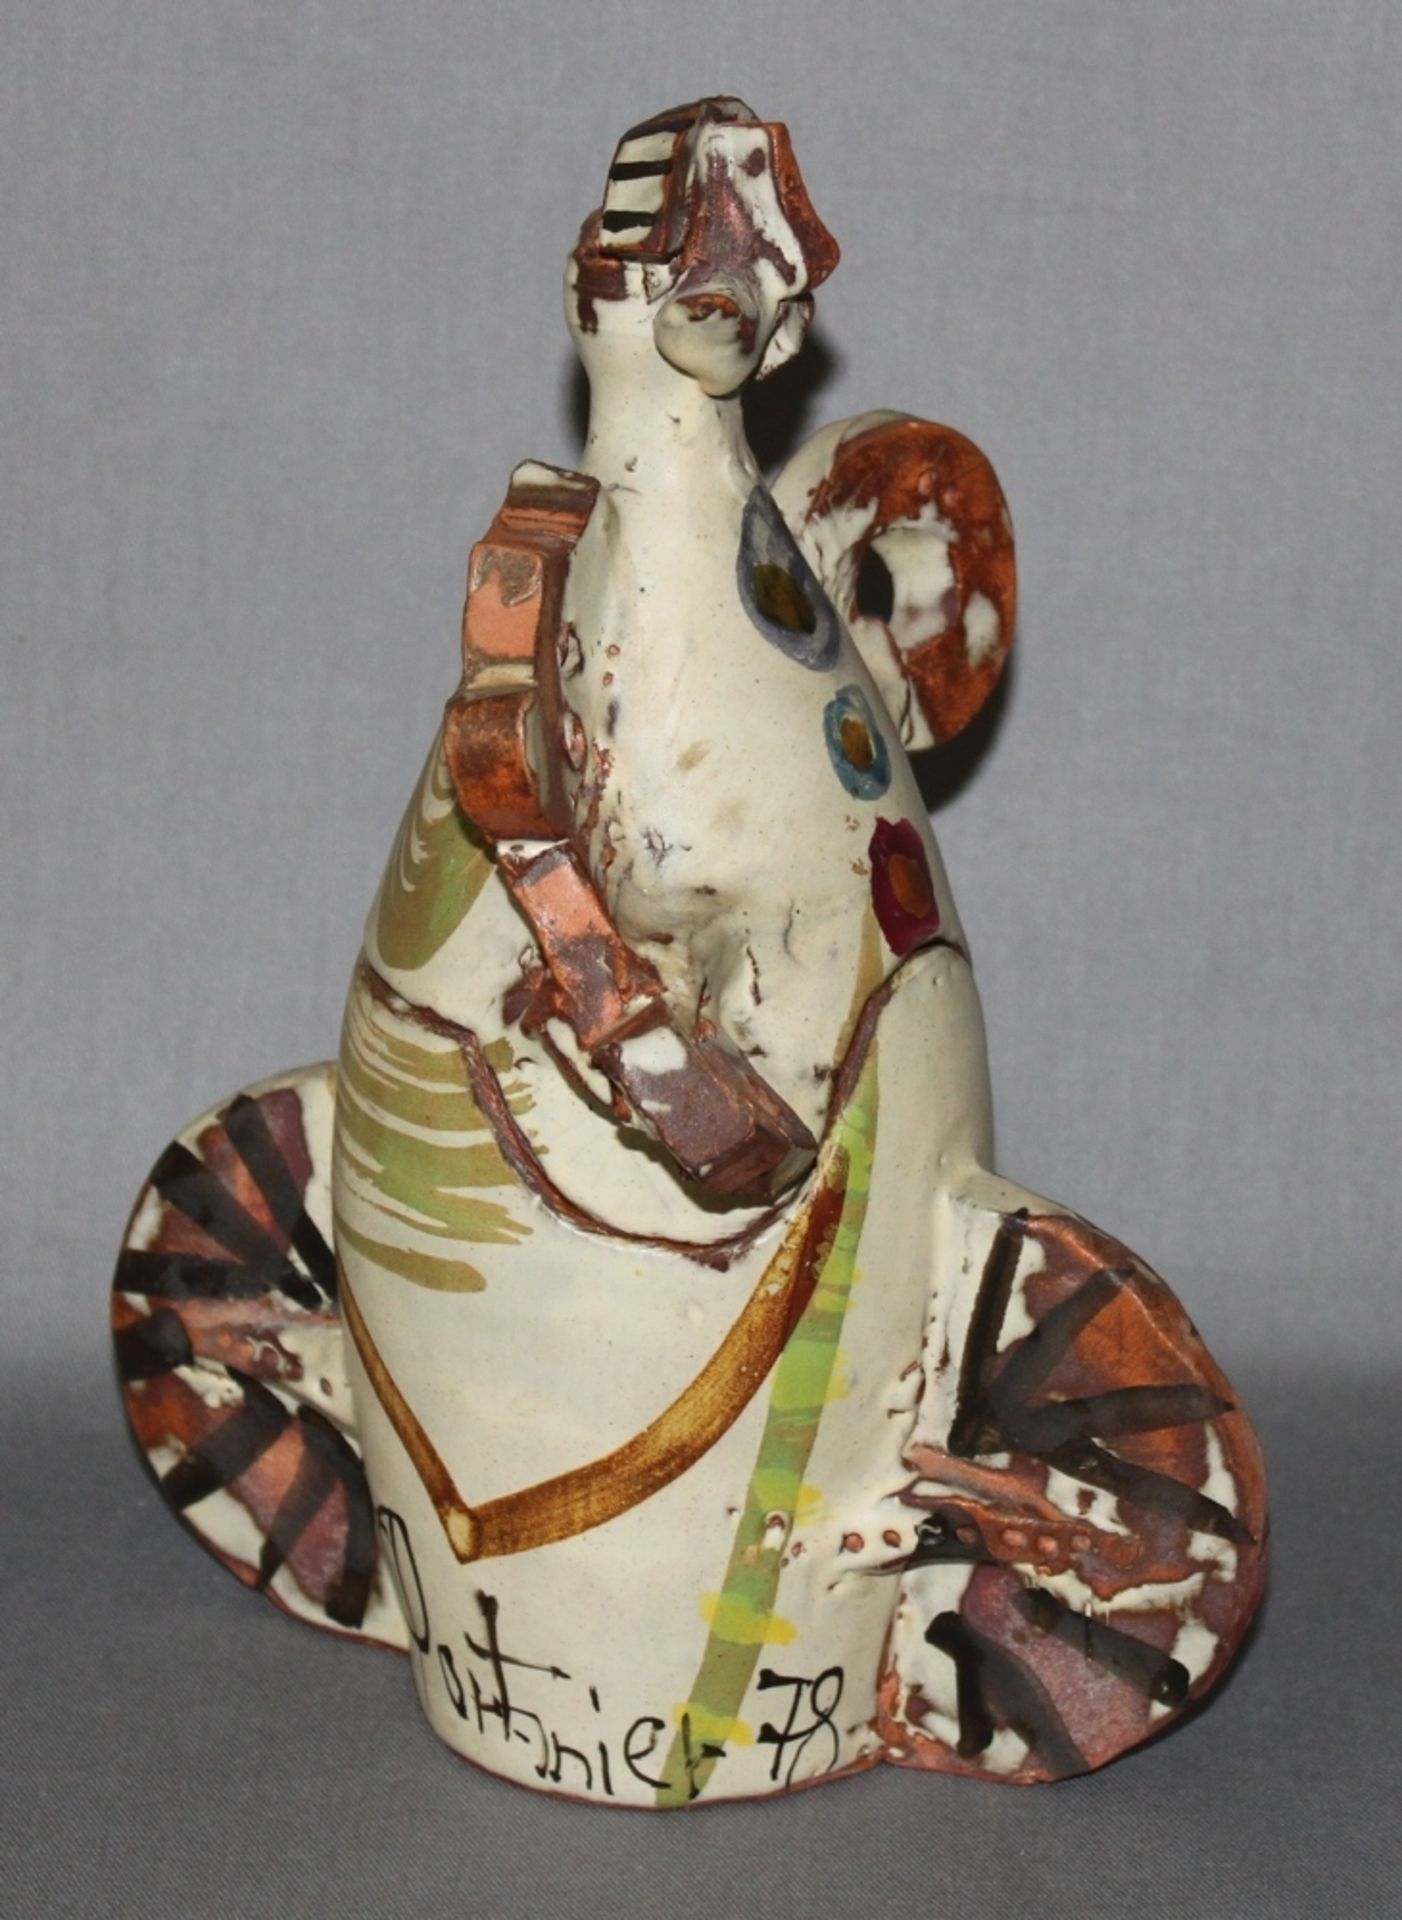 Keramik. Portanier, Gilbert. (Abstrakte Figur). Farbige Keramik (Mischtechnik), bestehend aus zwei